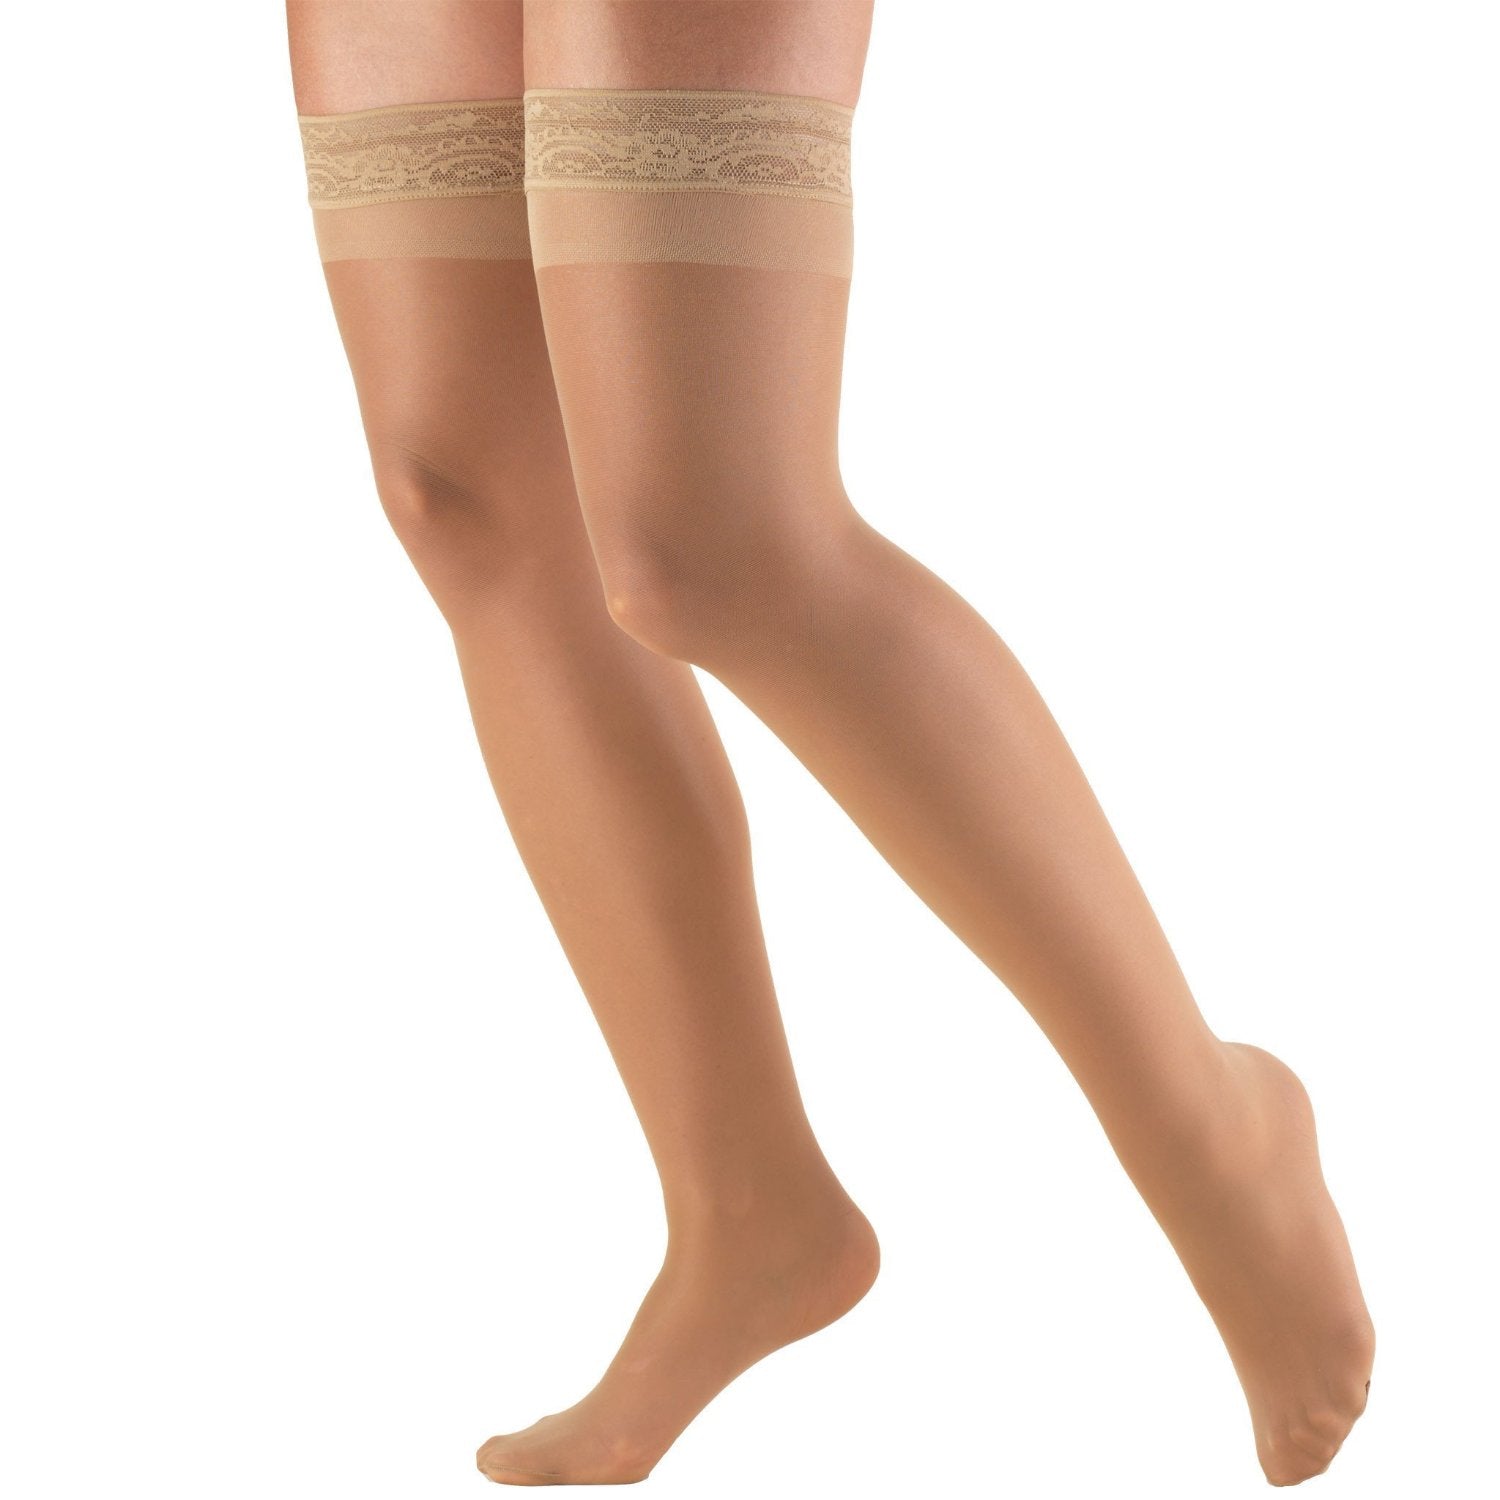 (1764, 1774, & 0264) Ladies' Sheer Thigh High Closed Toe Stockings